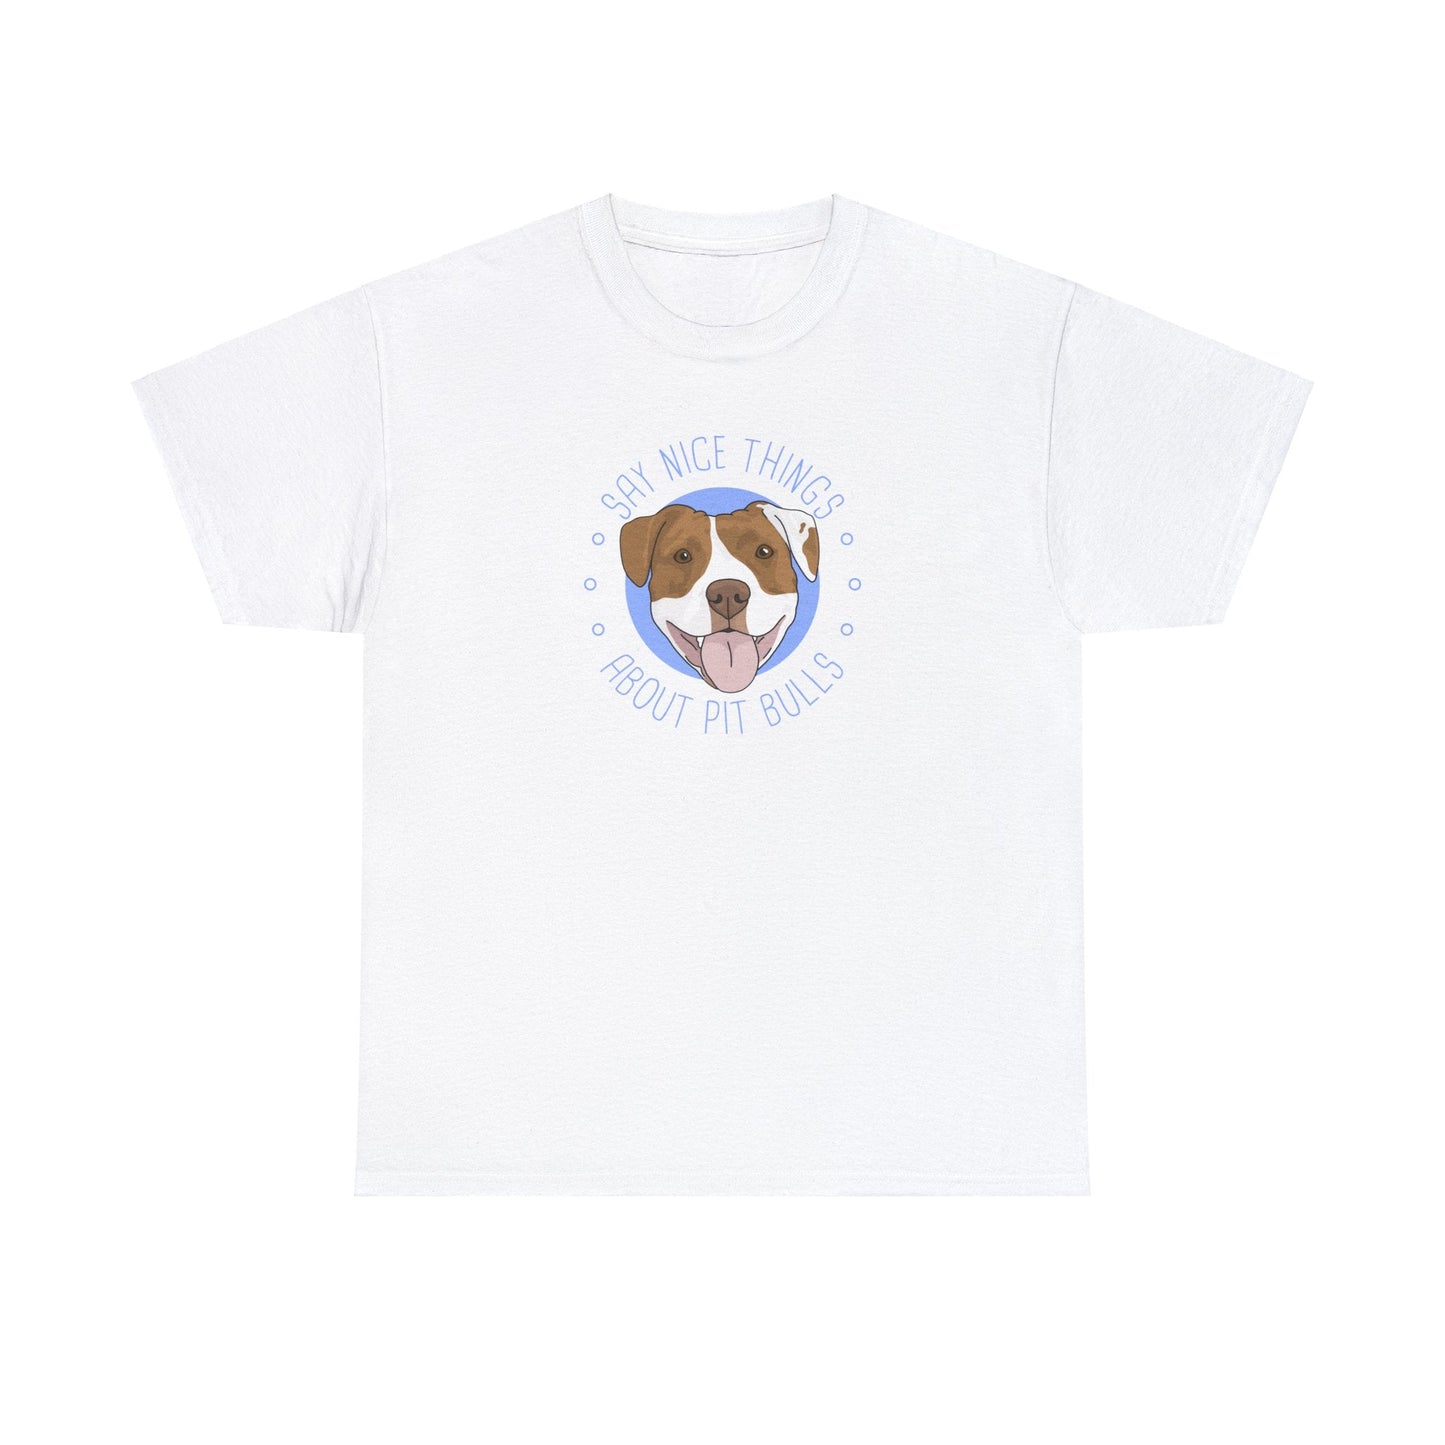 Say Nice Things About Pit Bulls | T-shirt - Detezi Designs-80579466671245699176